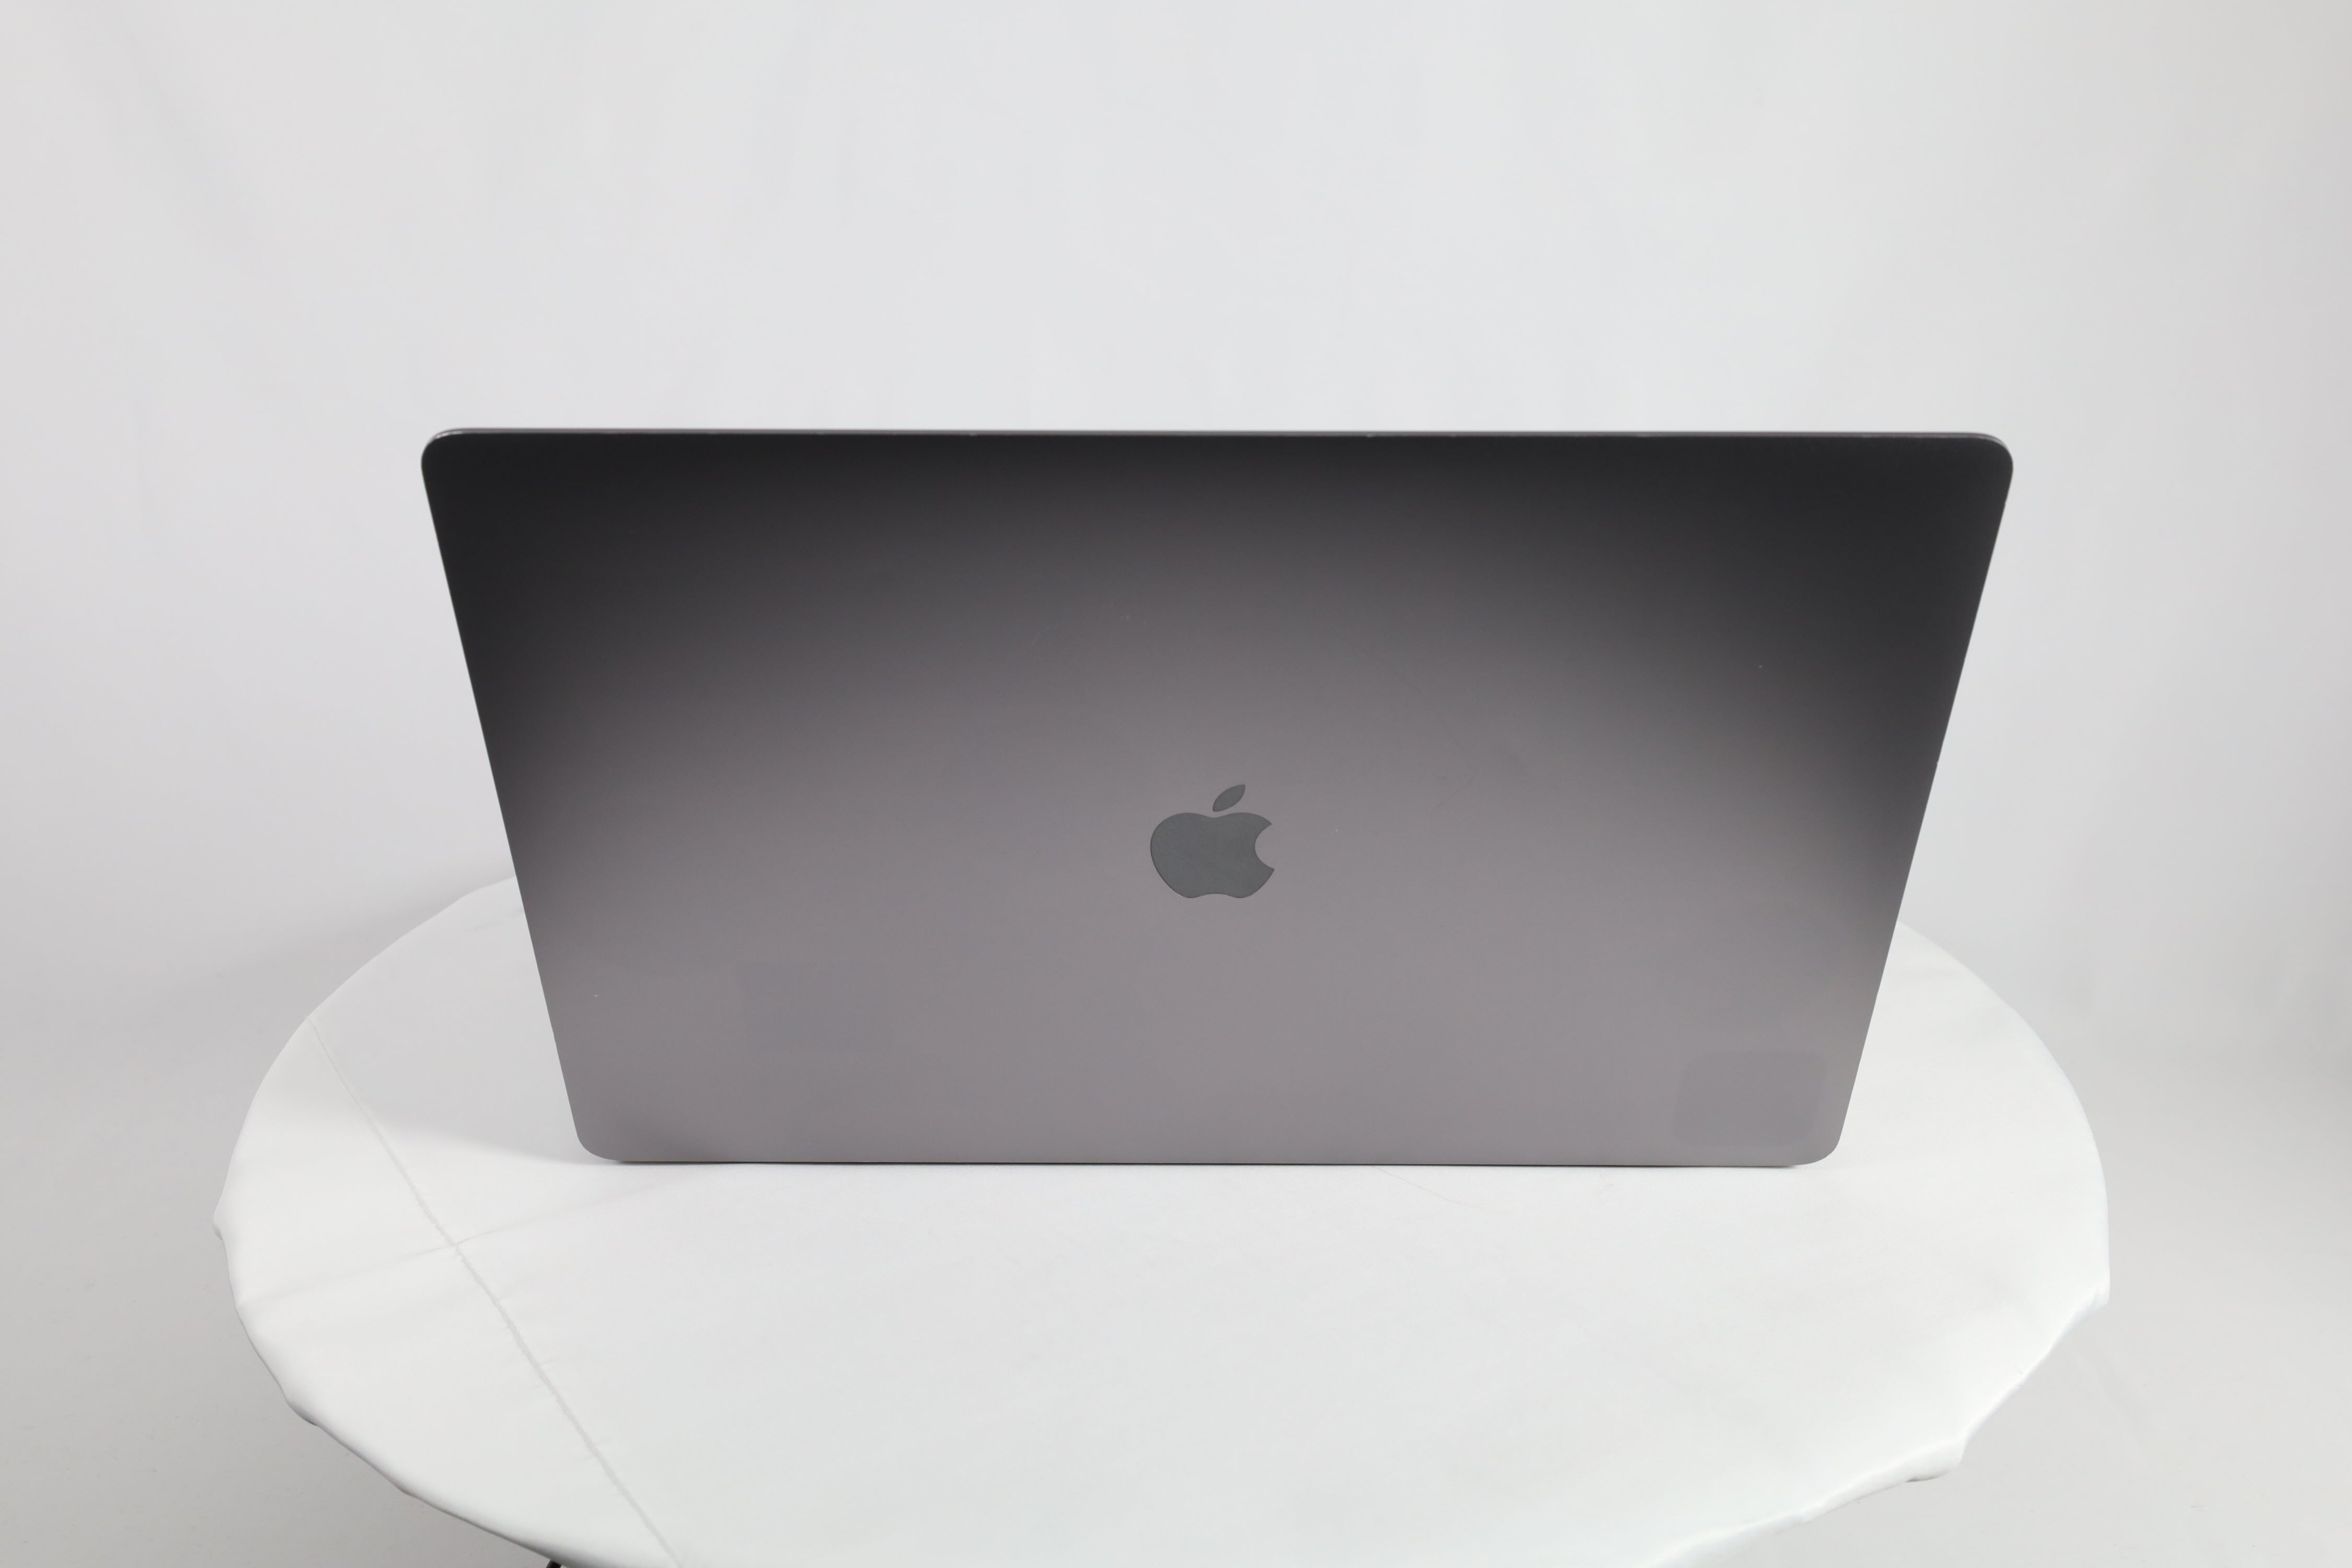 【Cランク】【中古】MacBook Pro (16-inch, 2019) スペースグレイ USキーボード